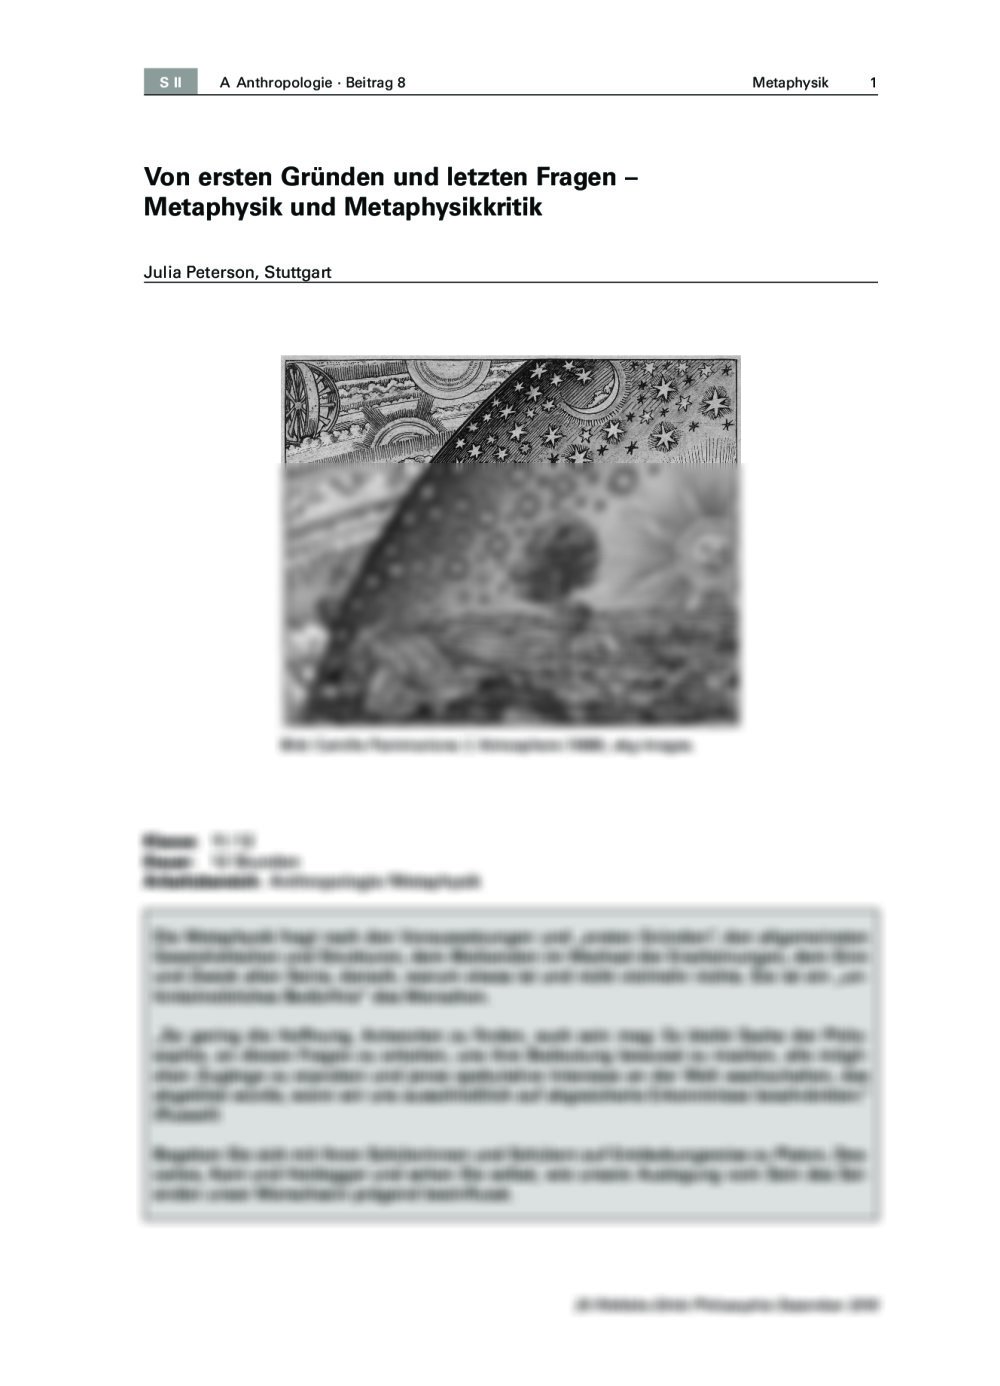 Metaphysik und Metaphysikkritik - Seite 1